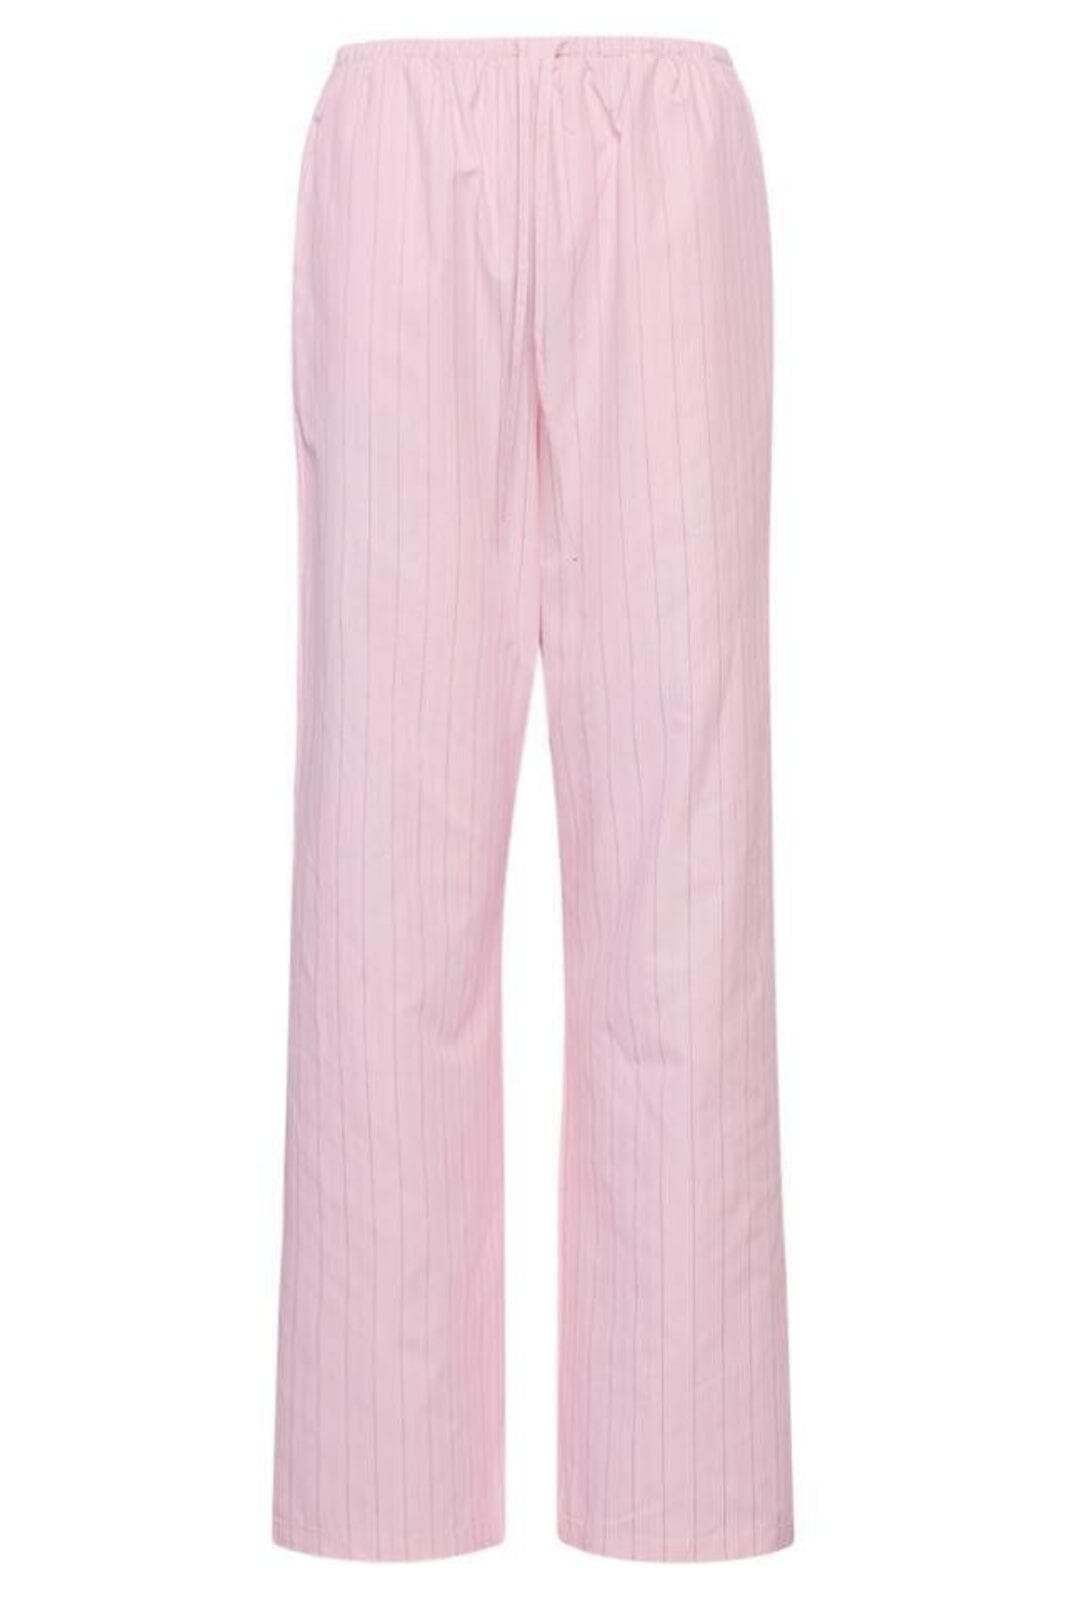 Noella - Sally Pants - Light Pink Stripe Bukser 